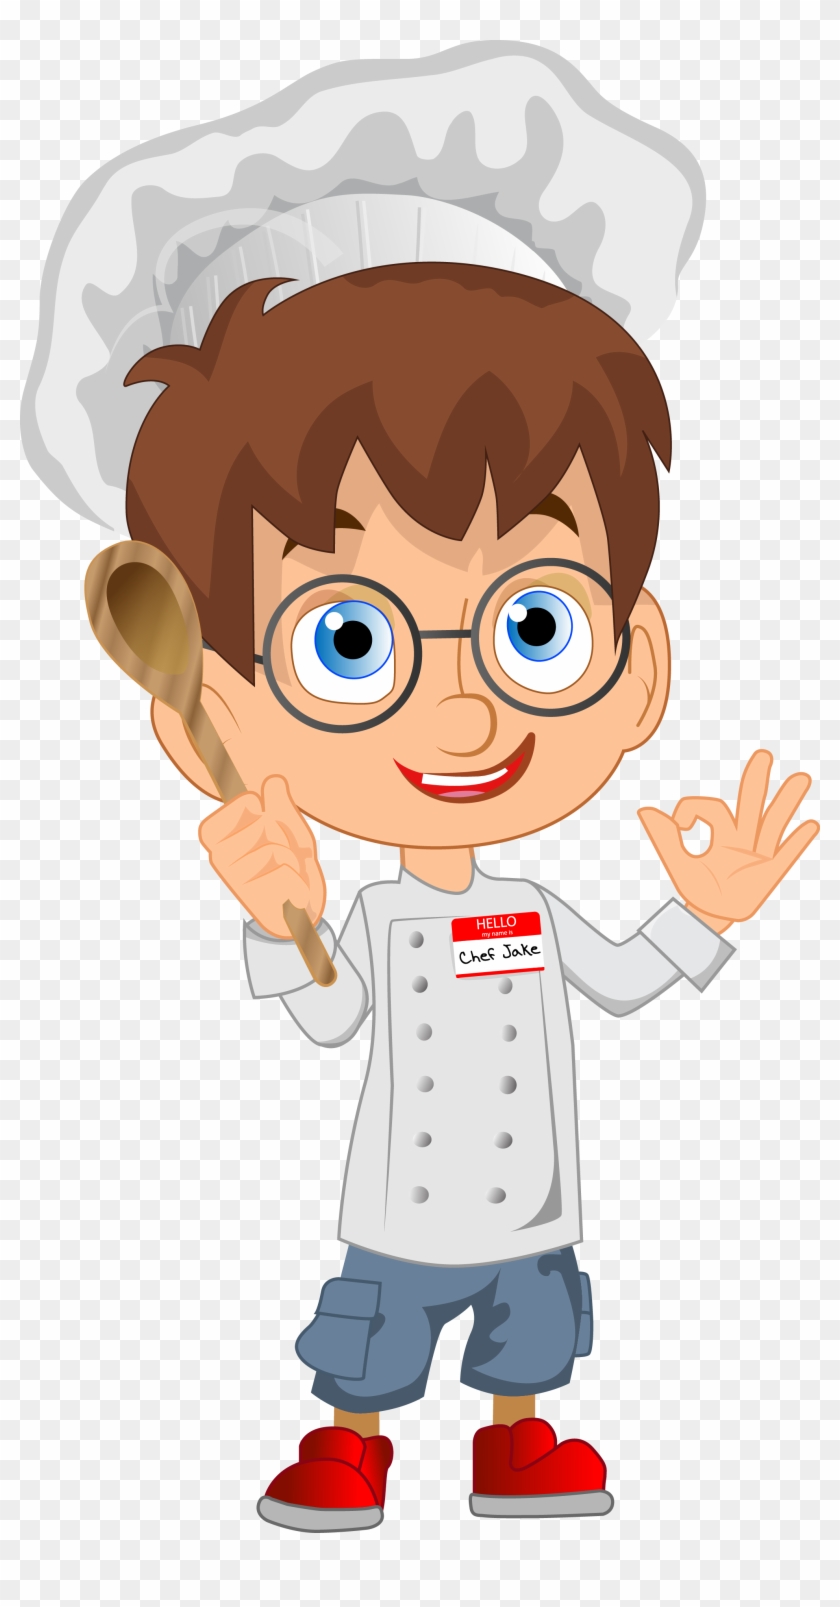 2032 X 3793 4 - Chef Boy Cartoon Png, Transparent Png - 2032x3793(#1208591)  - PngFind